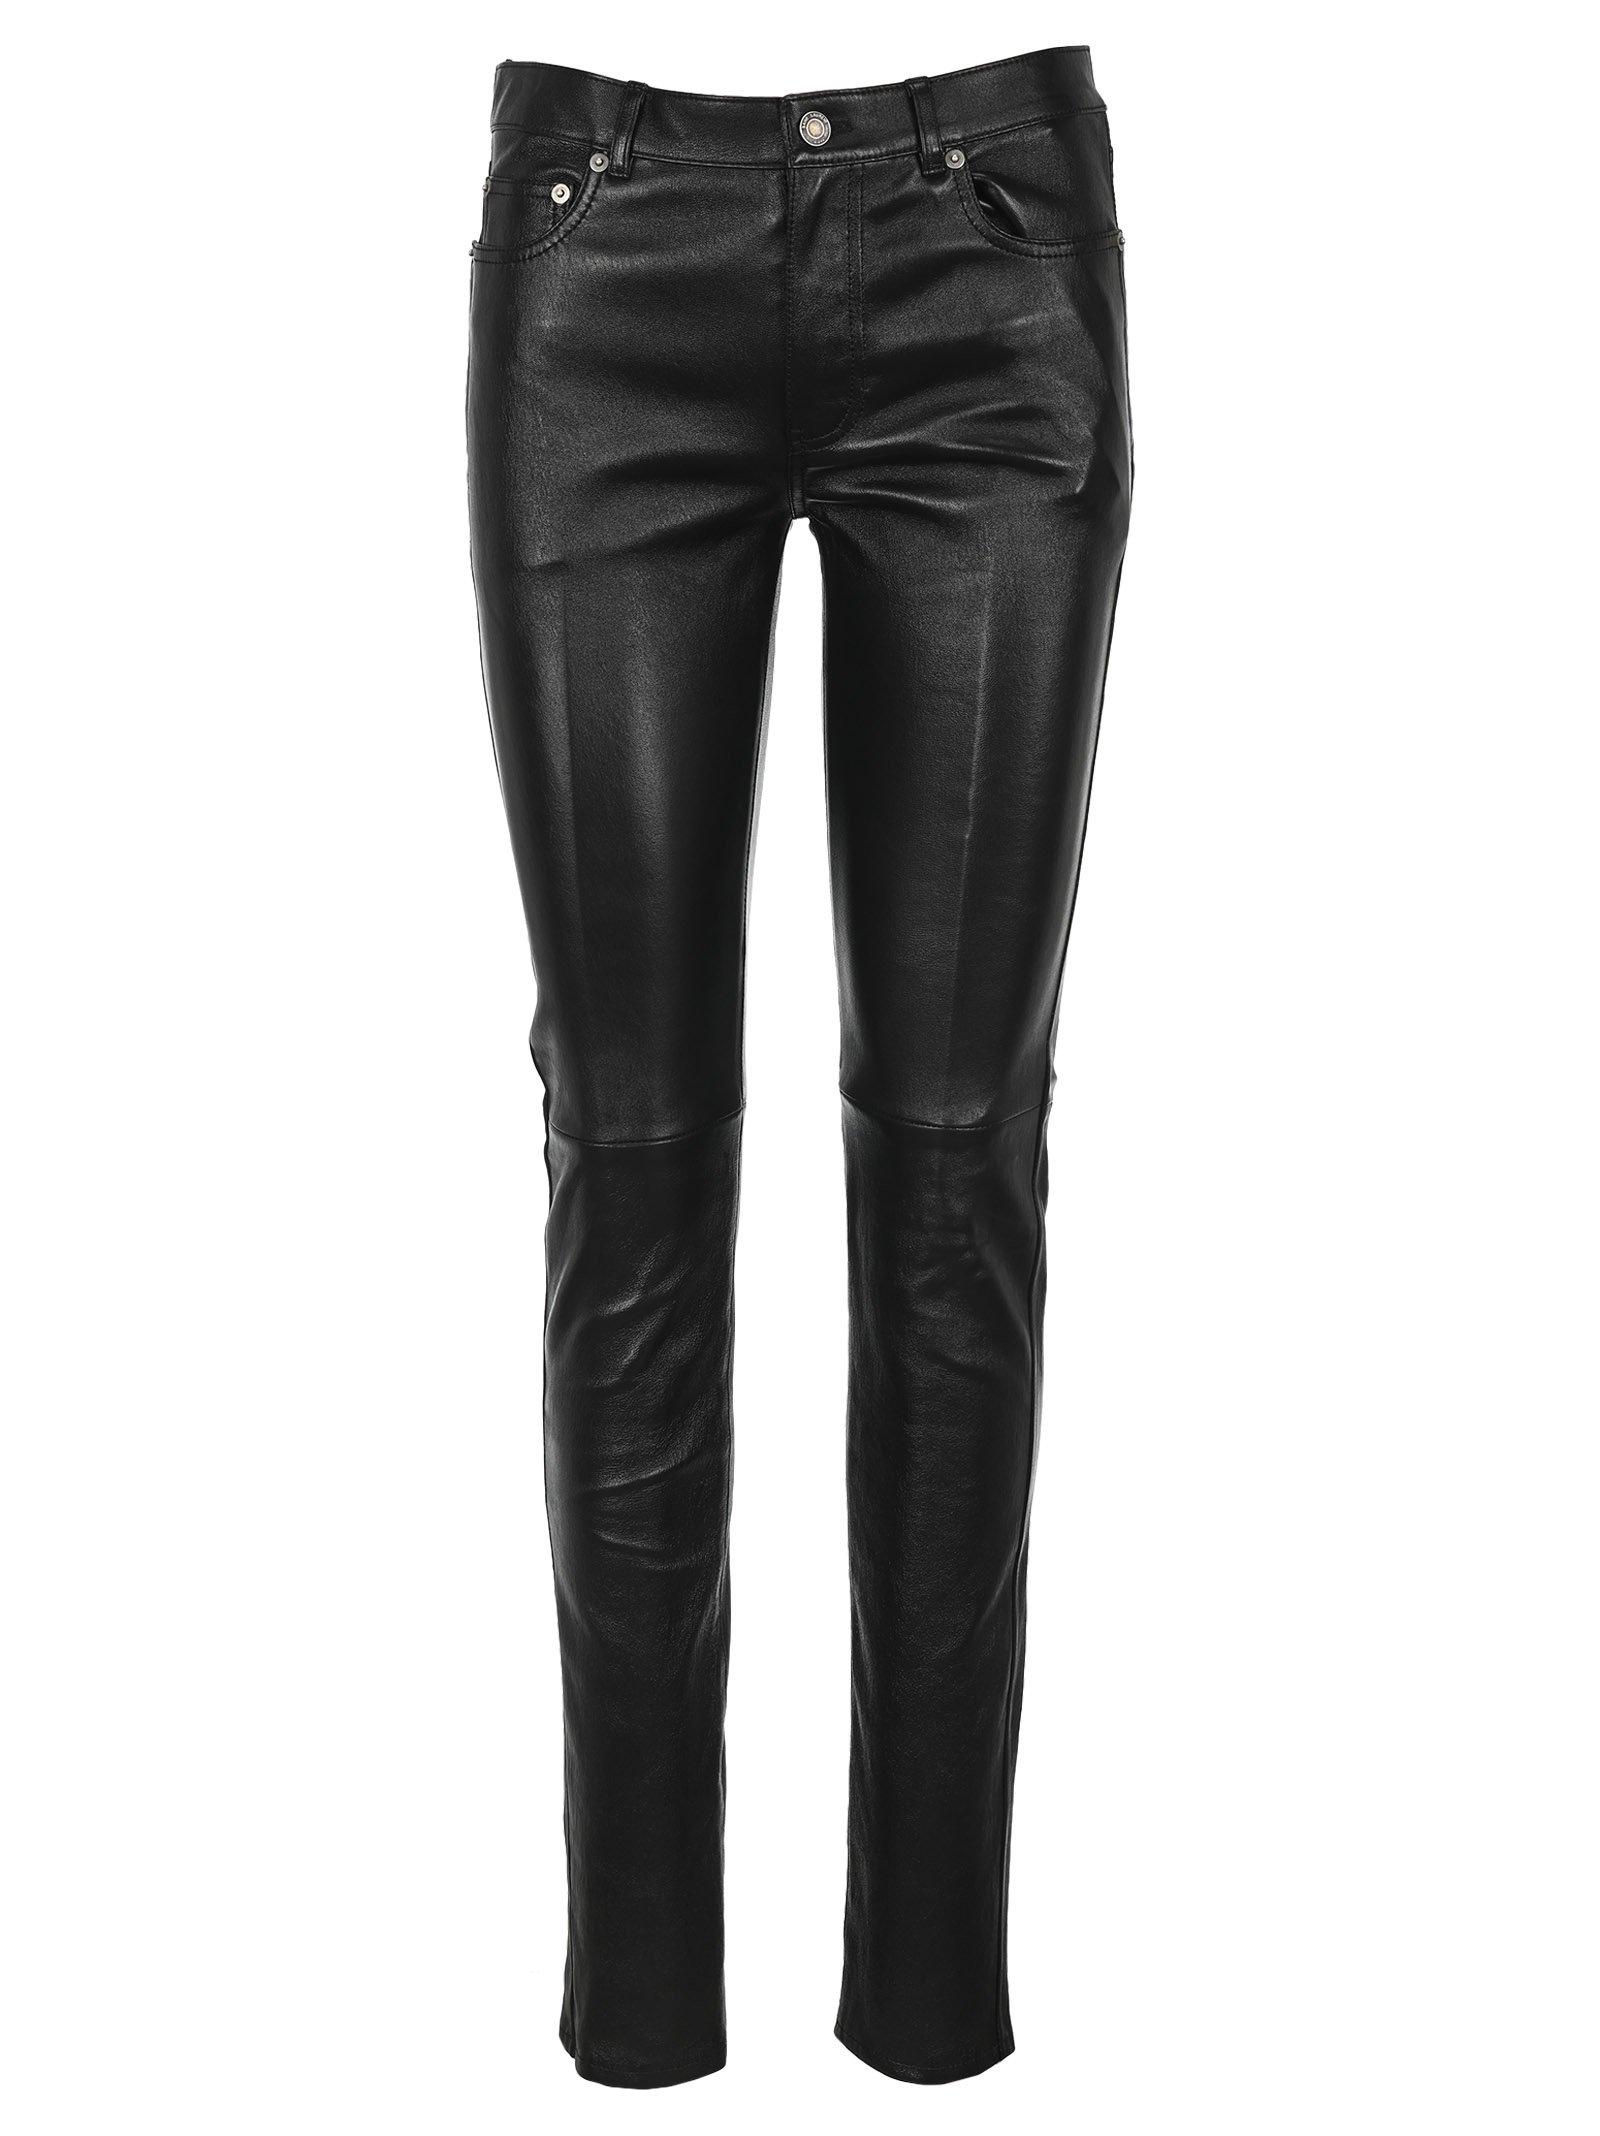 Saint Laurent Skinny Fit Leather Pants in Black - Lyst